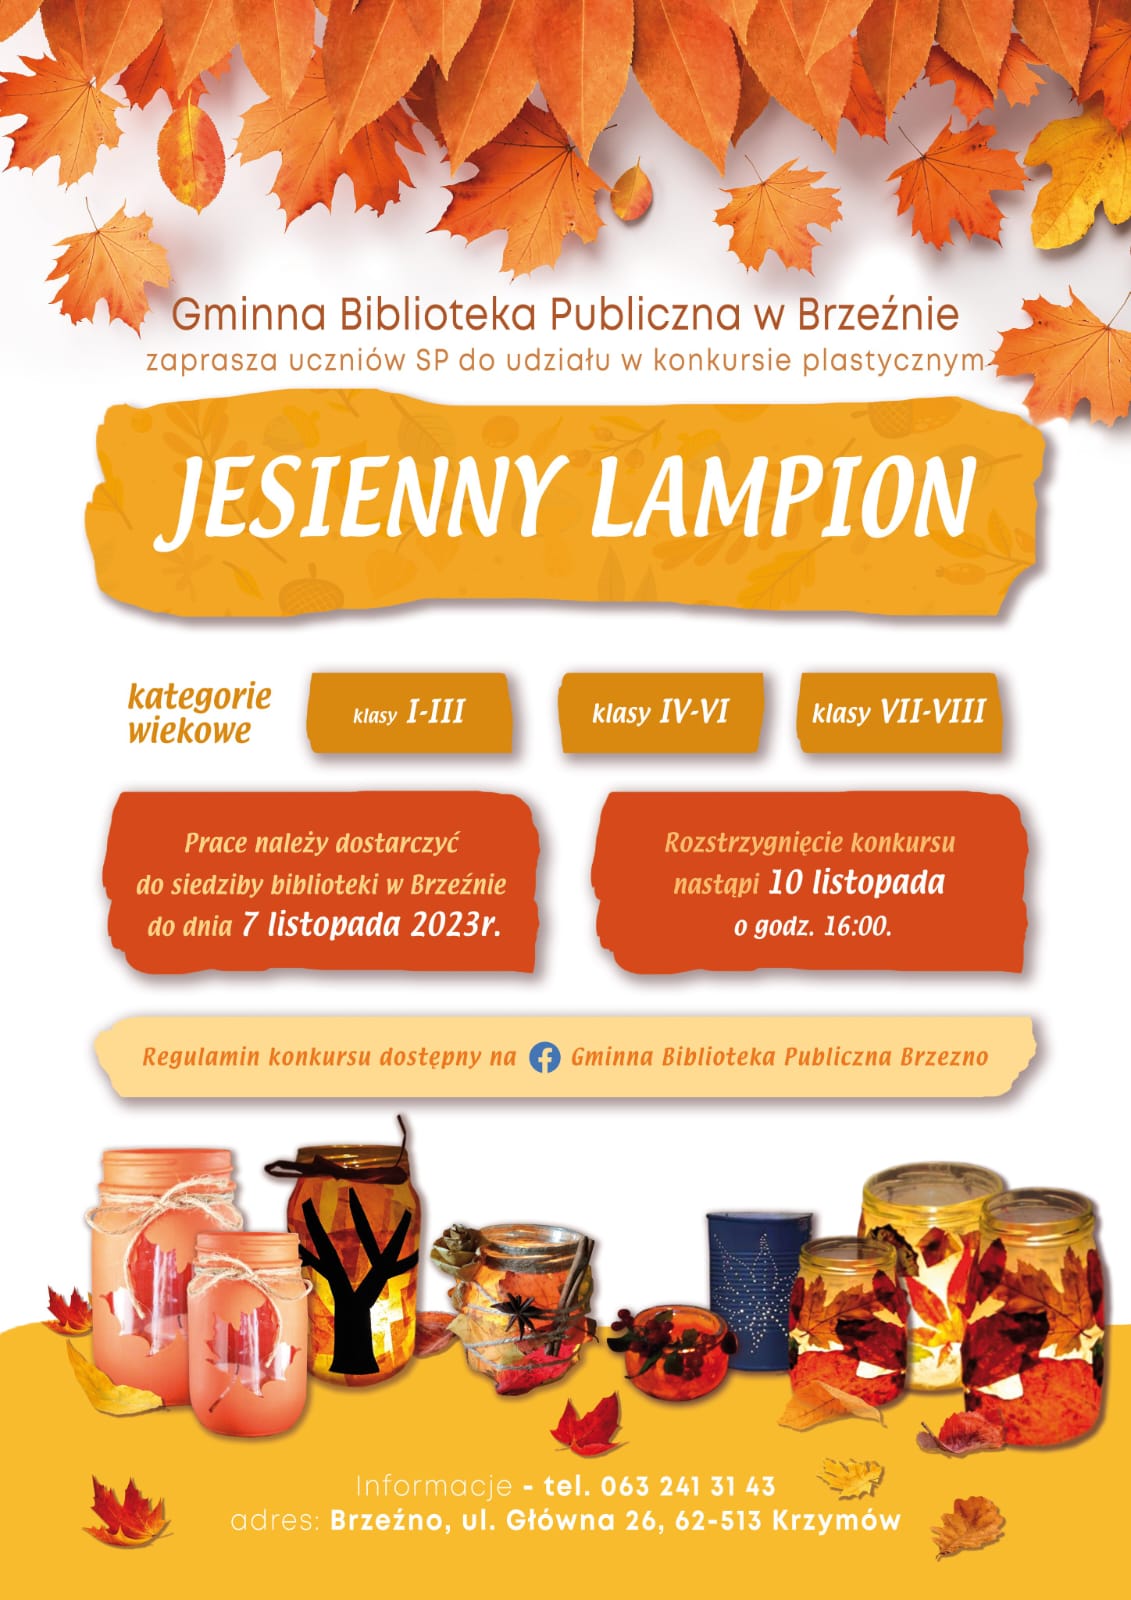 Plakat promujący konkurs Jesienny lampion